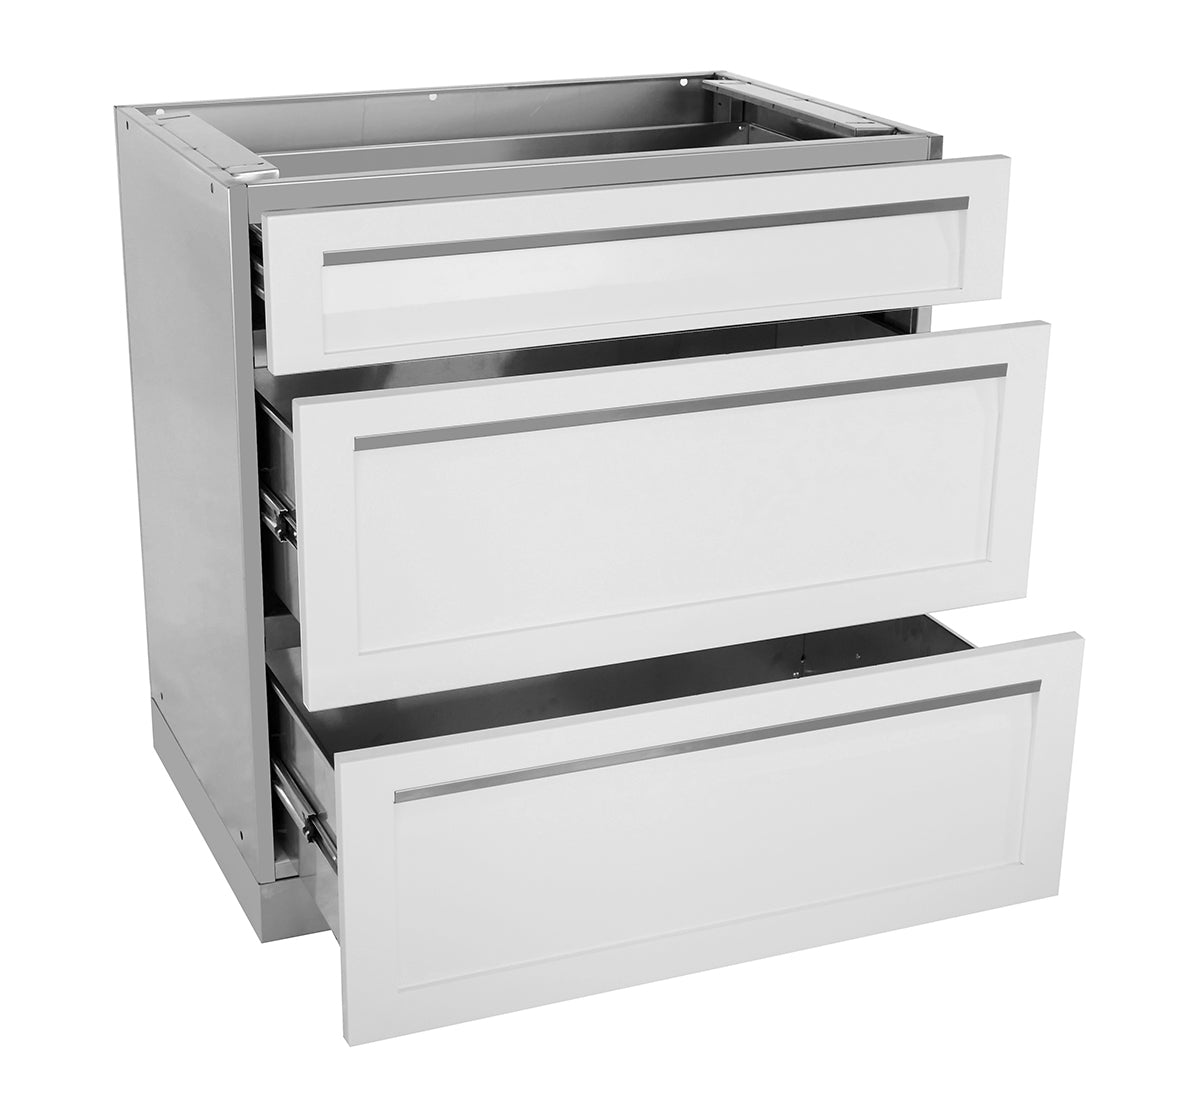 3 PC  White Outdoor Kitchen: BBQ Grill Cabinet, 3 Drawer, 2-Door Cabinet